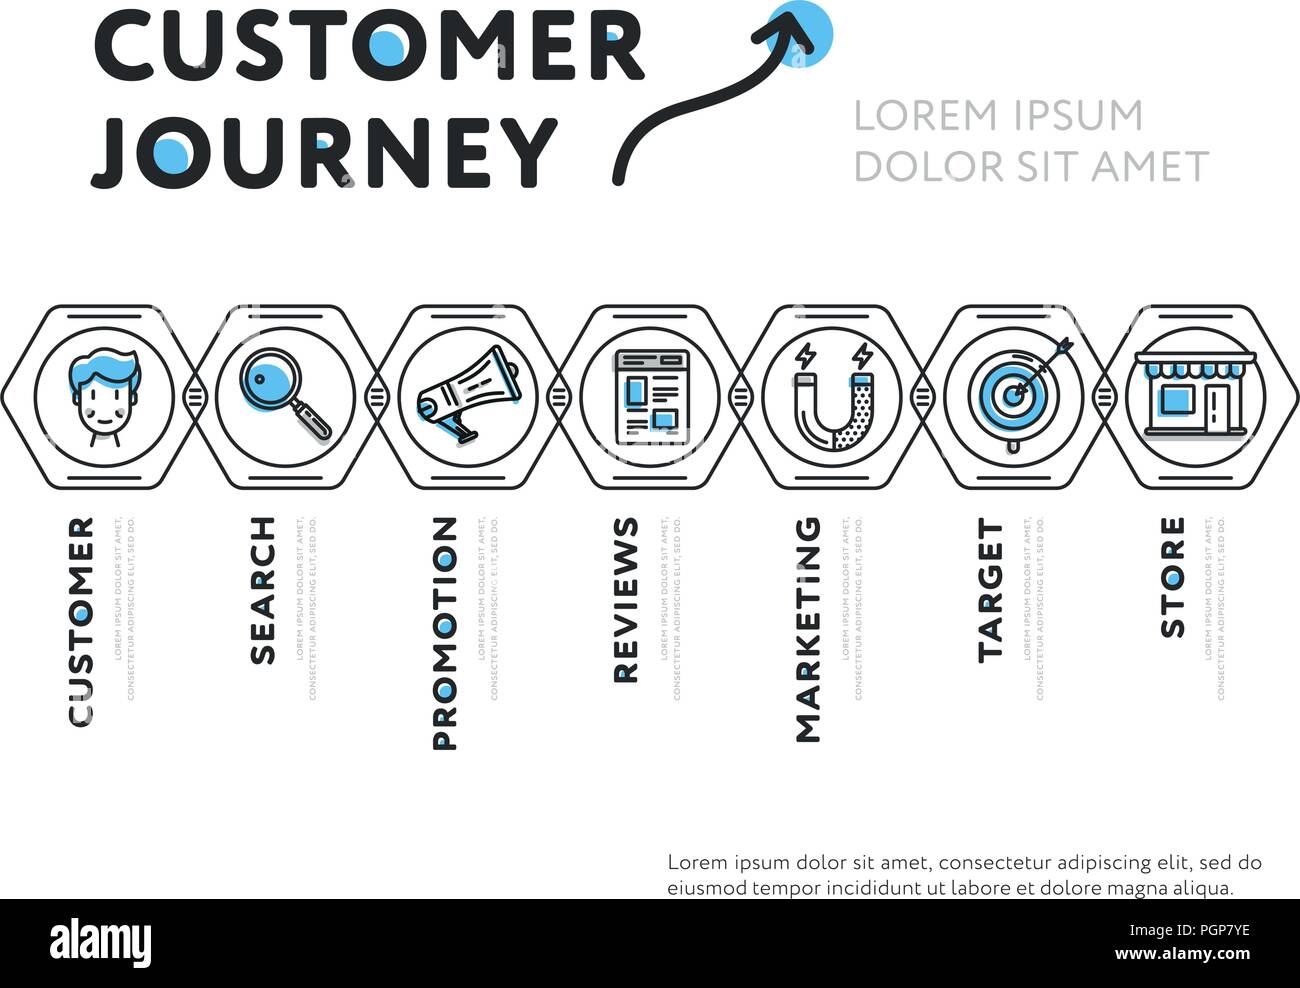 Simple design of customer journey representation Stock Vector